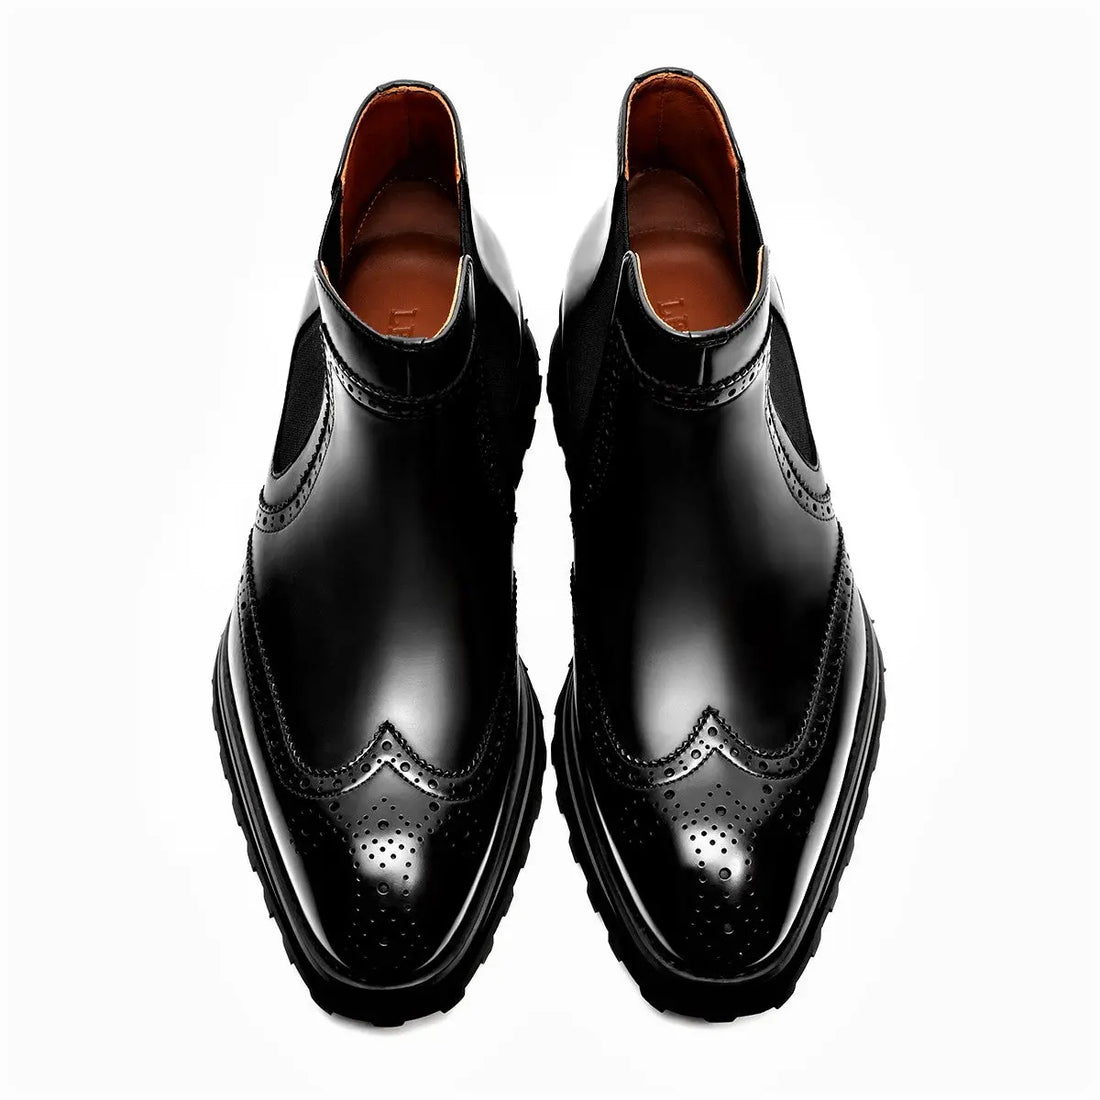 Men's genuine leather elasticated black Brogue Chelsea boots 900H01A LEIZILEI